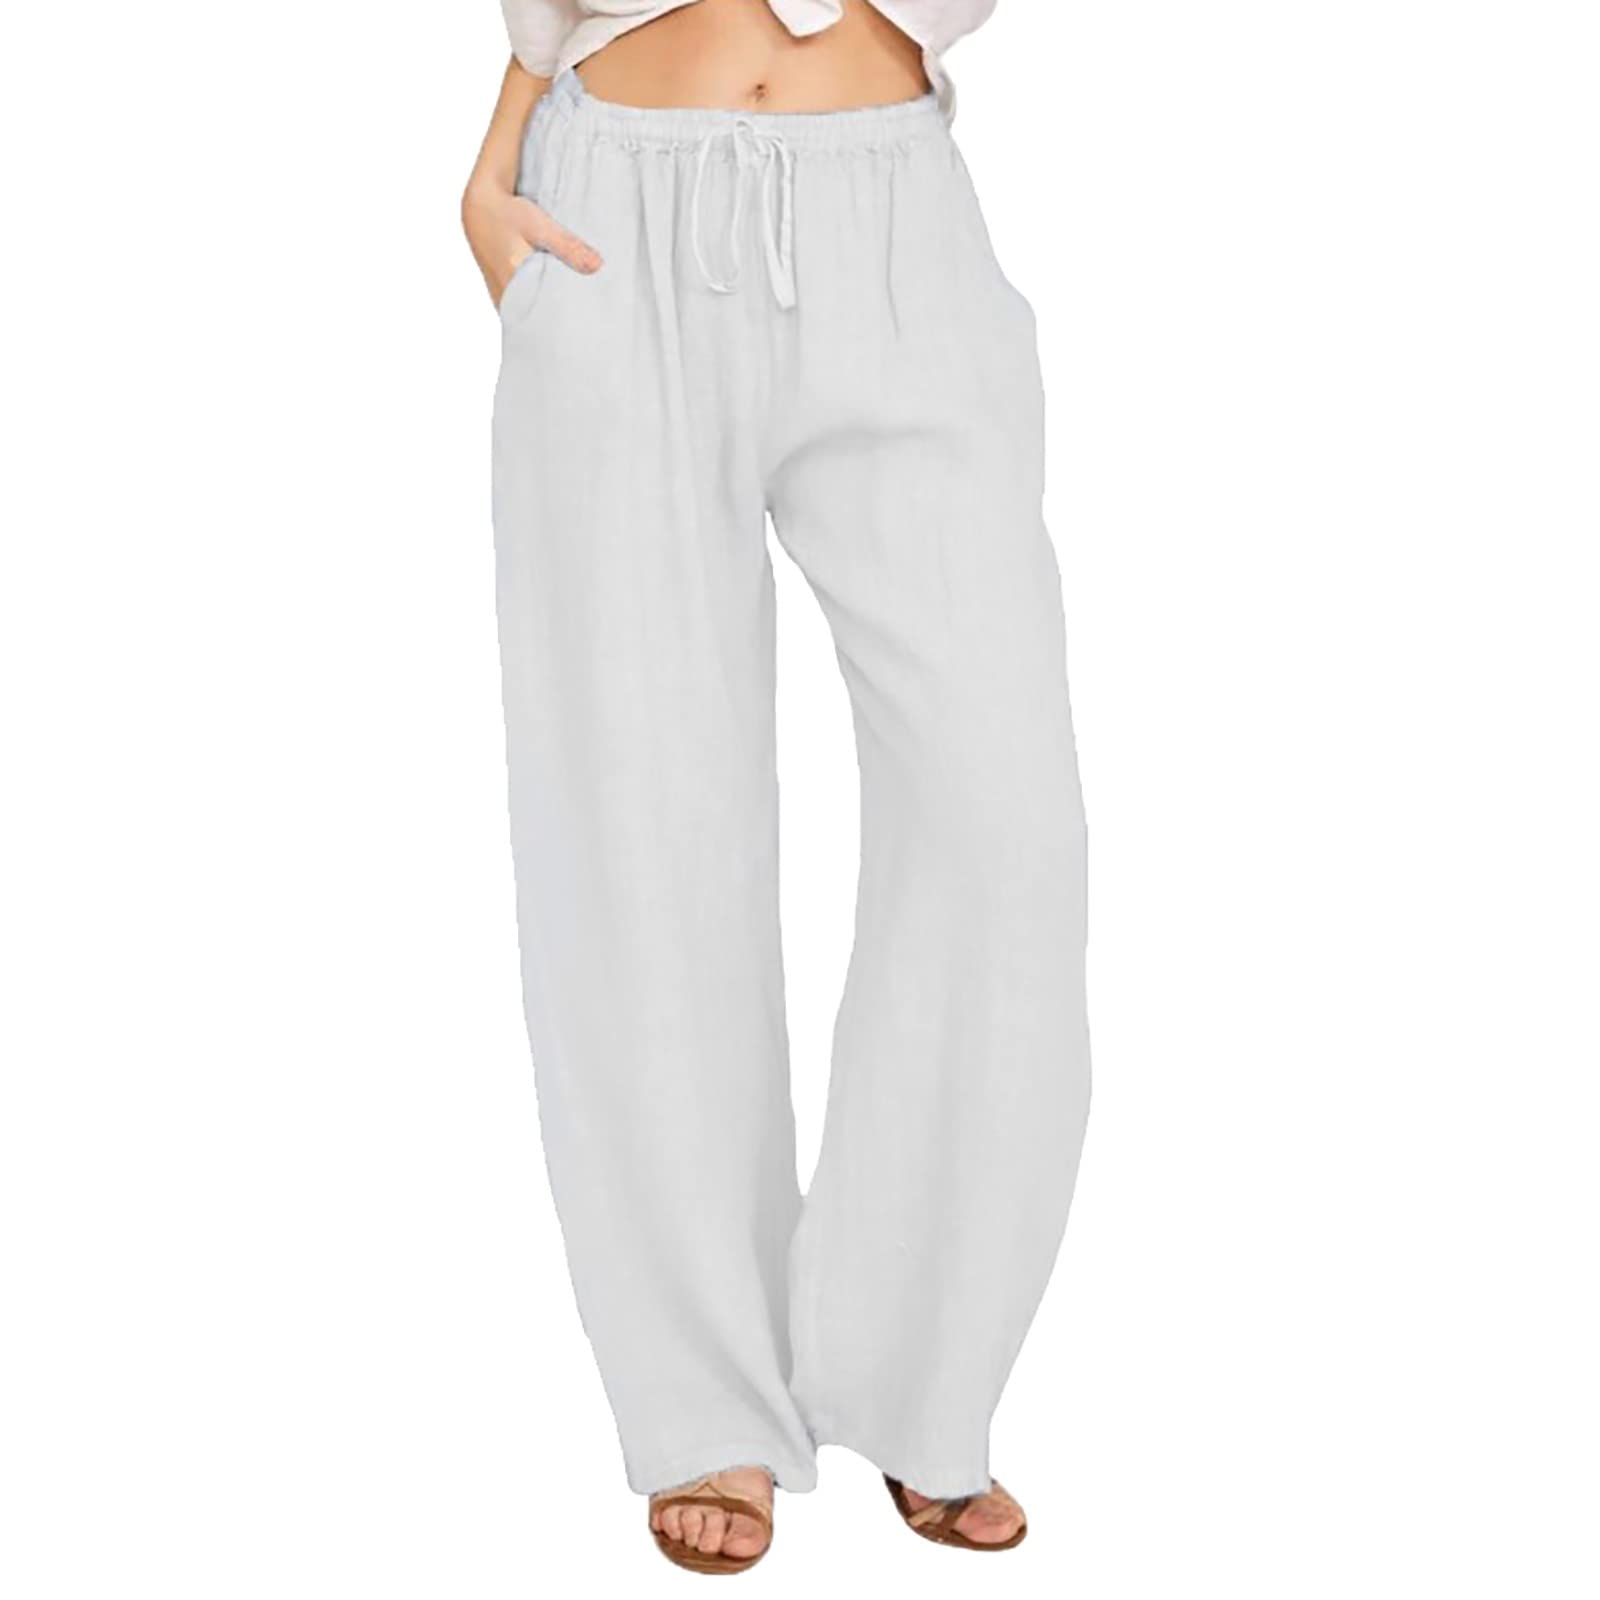 Martmory Women's Casual Cotton Linen Long Pants Elastic Waist Drawstring  Straight Leg Lounge Oceanside Summer Beach